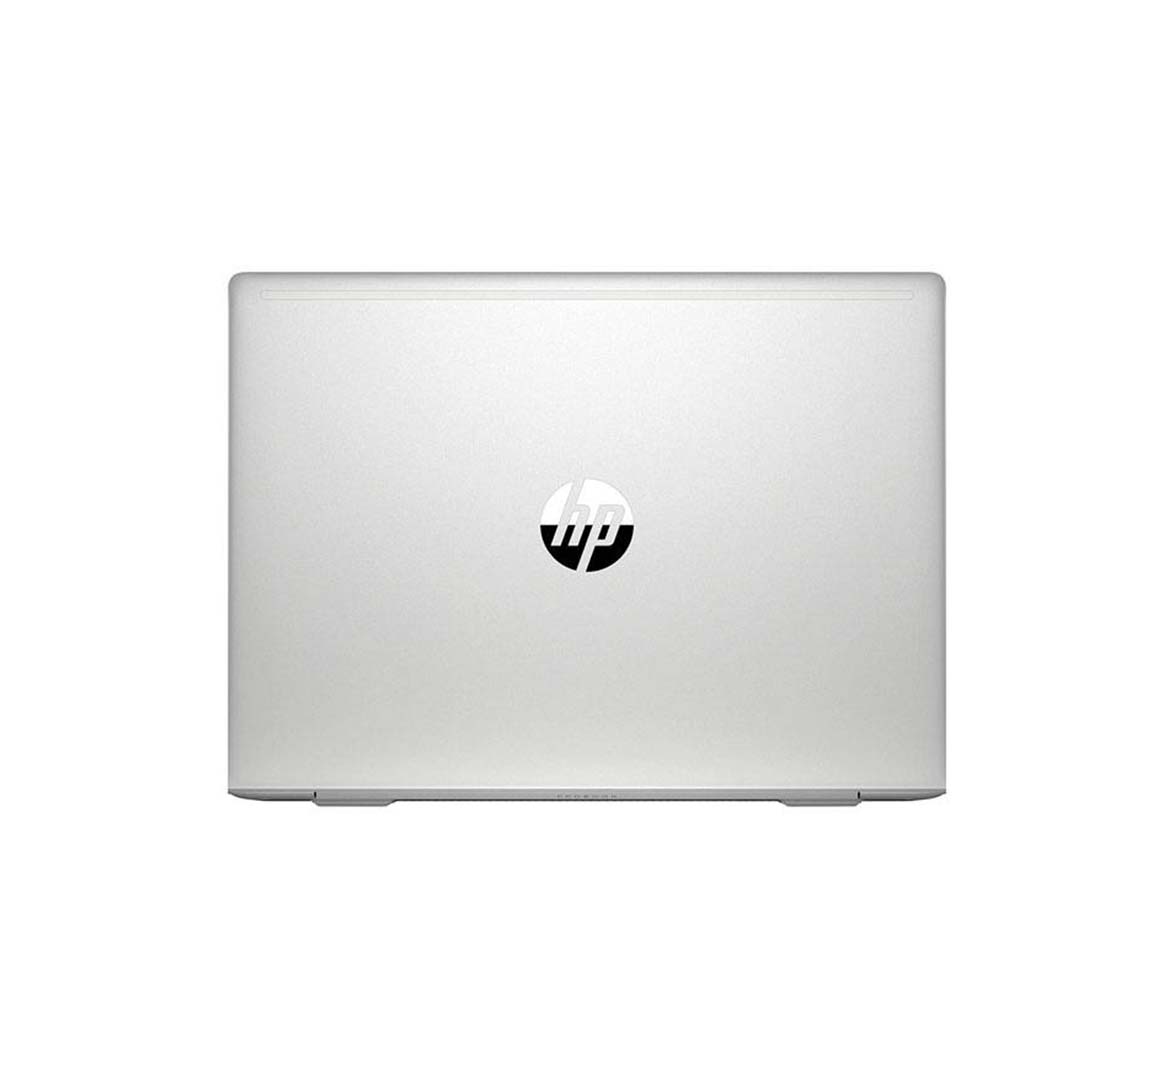 HP  ProBook 440 G6 Business Laptop, Intel Core i5-8th Generation CPU, 8GB RAM, 256GB SSD, 14 inch Display, Windows 10 Pro